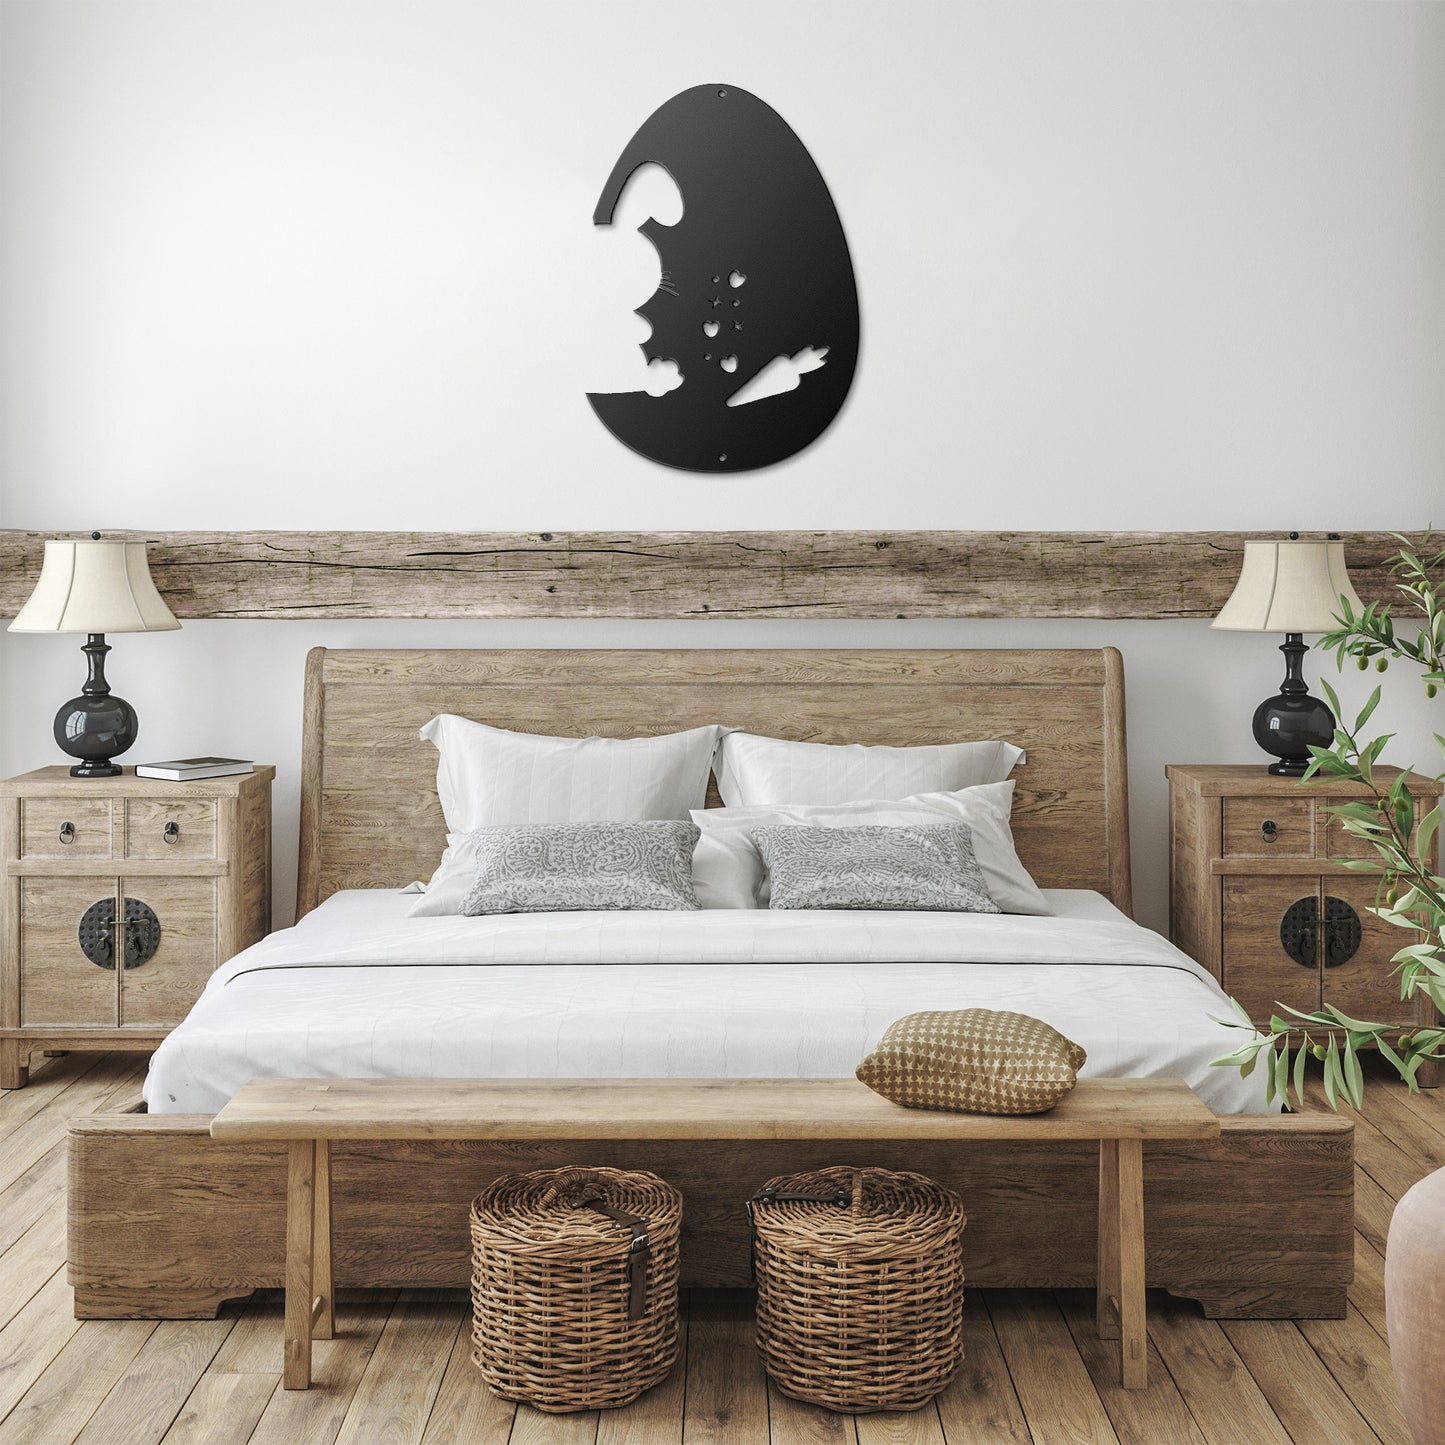 The Bunny and the Egg or the Egg and the Bunny Metal Wall Art